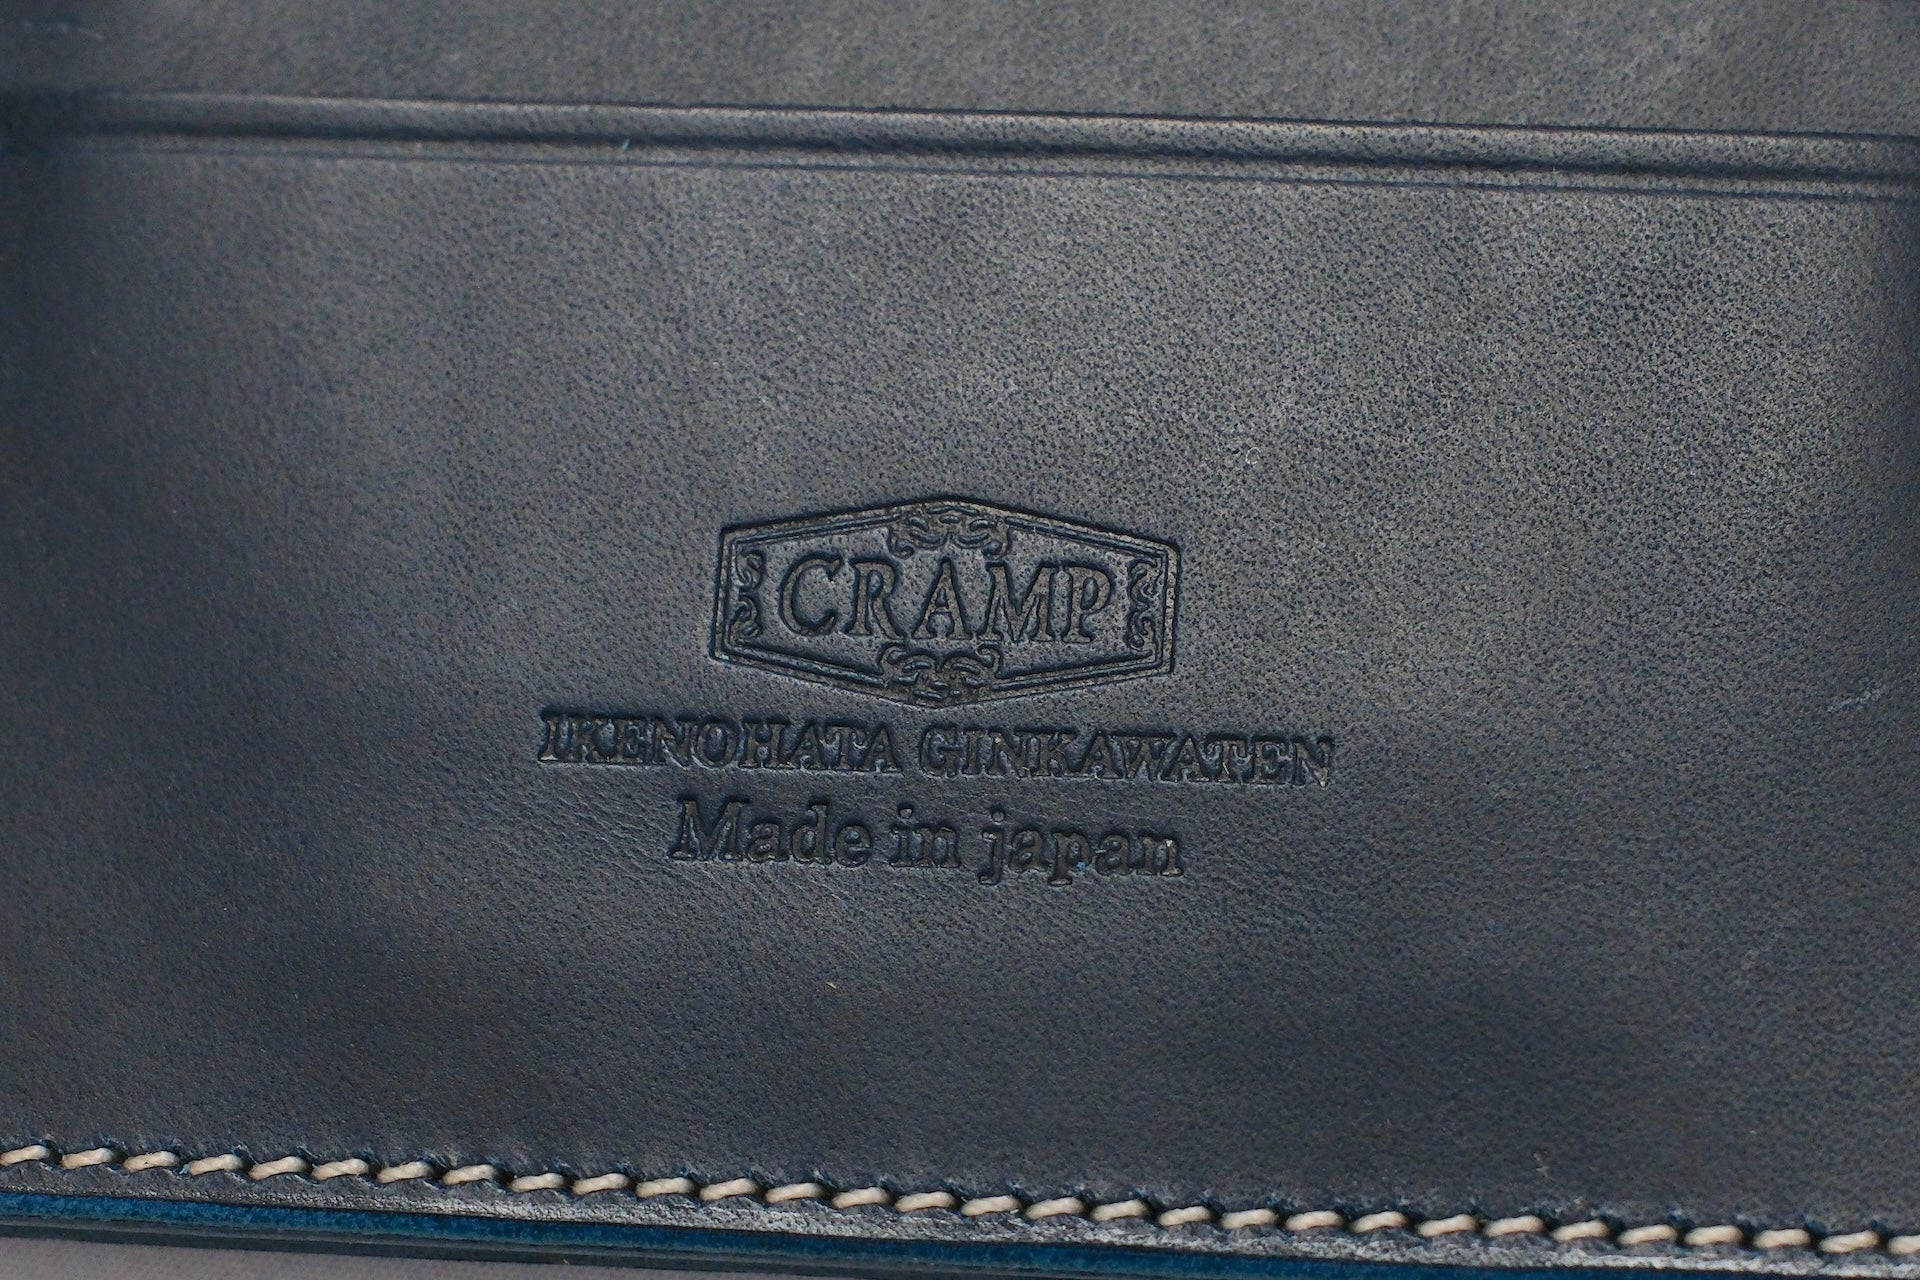 Cramp by Ikenohata Ginkawaten X CORLECTION Full-Grain Cowhide Card Case